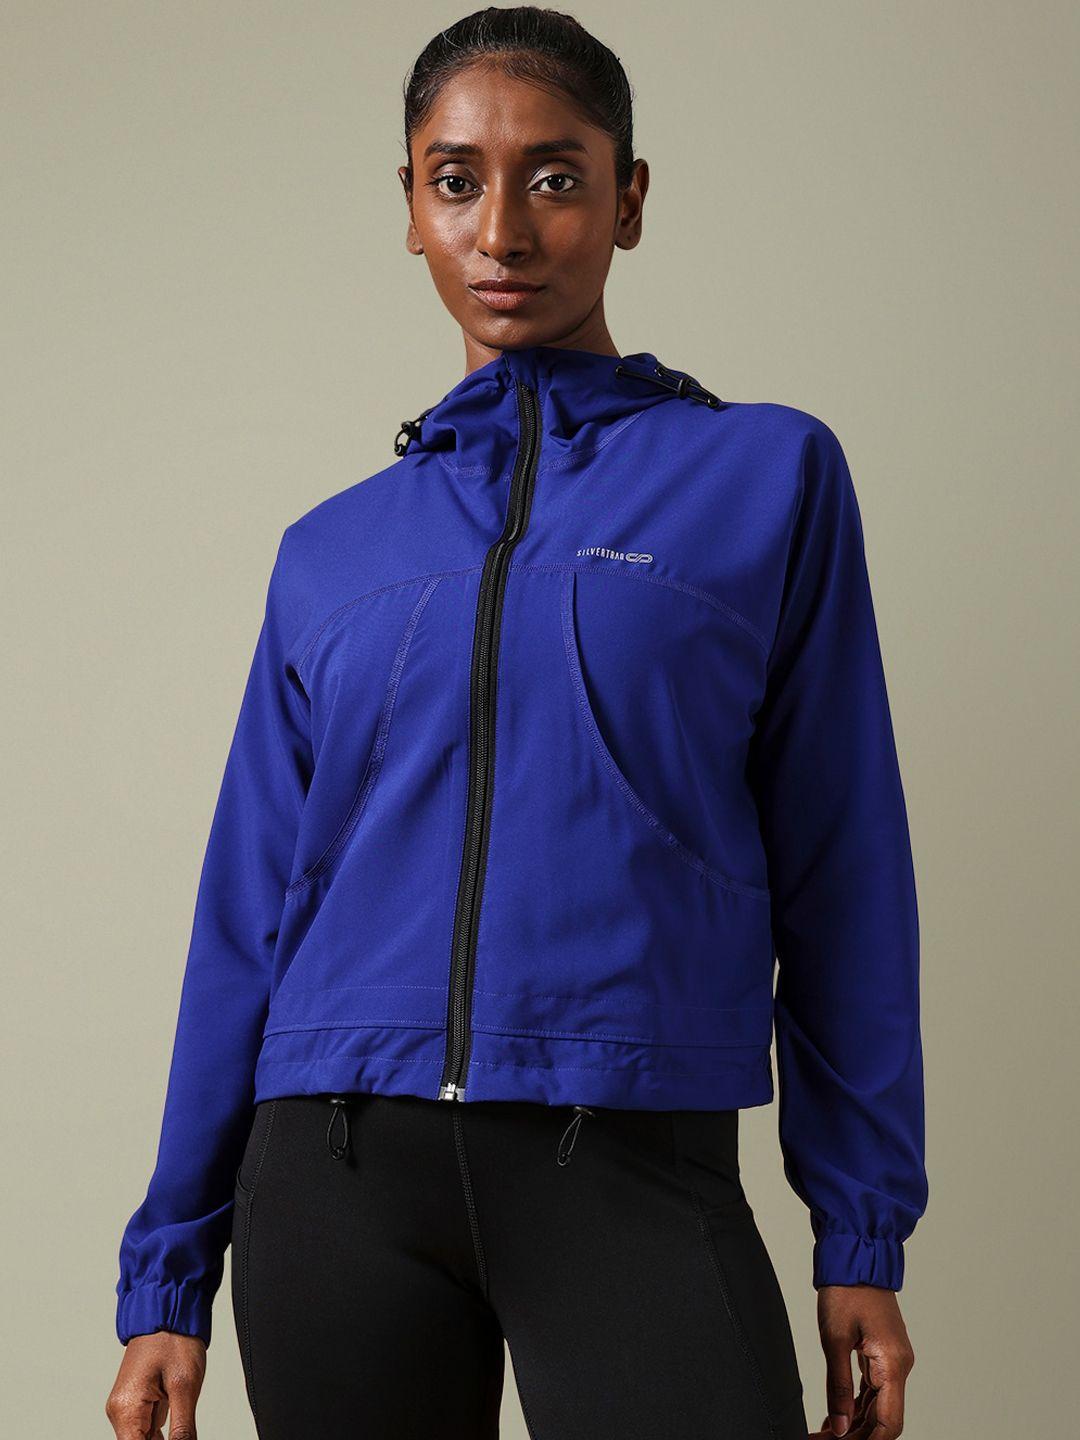 silvertraq hooded lightweight rapid-dry sporty jacket